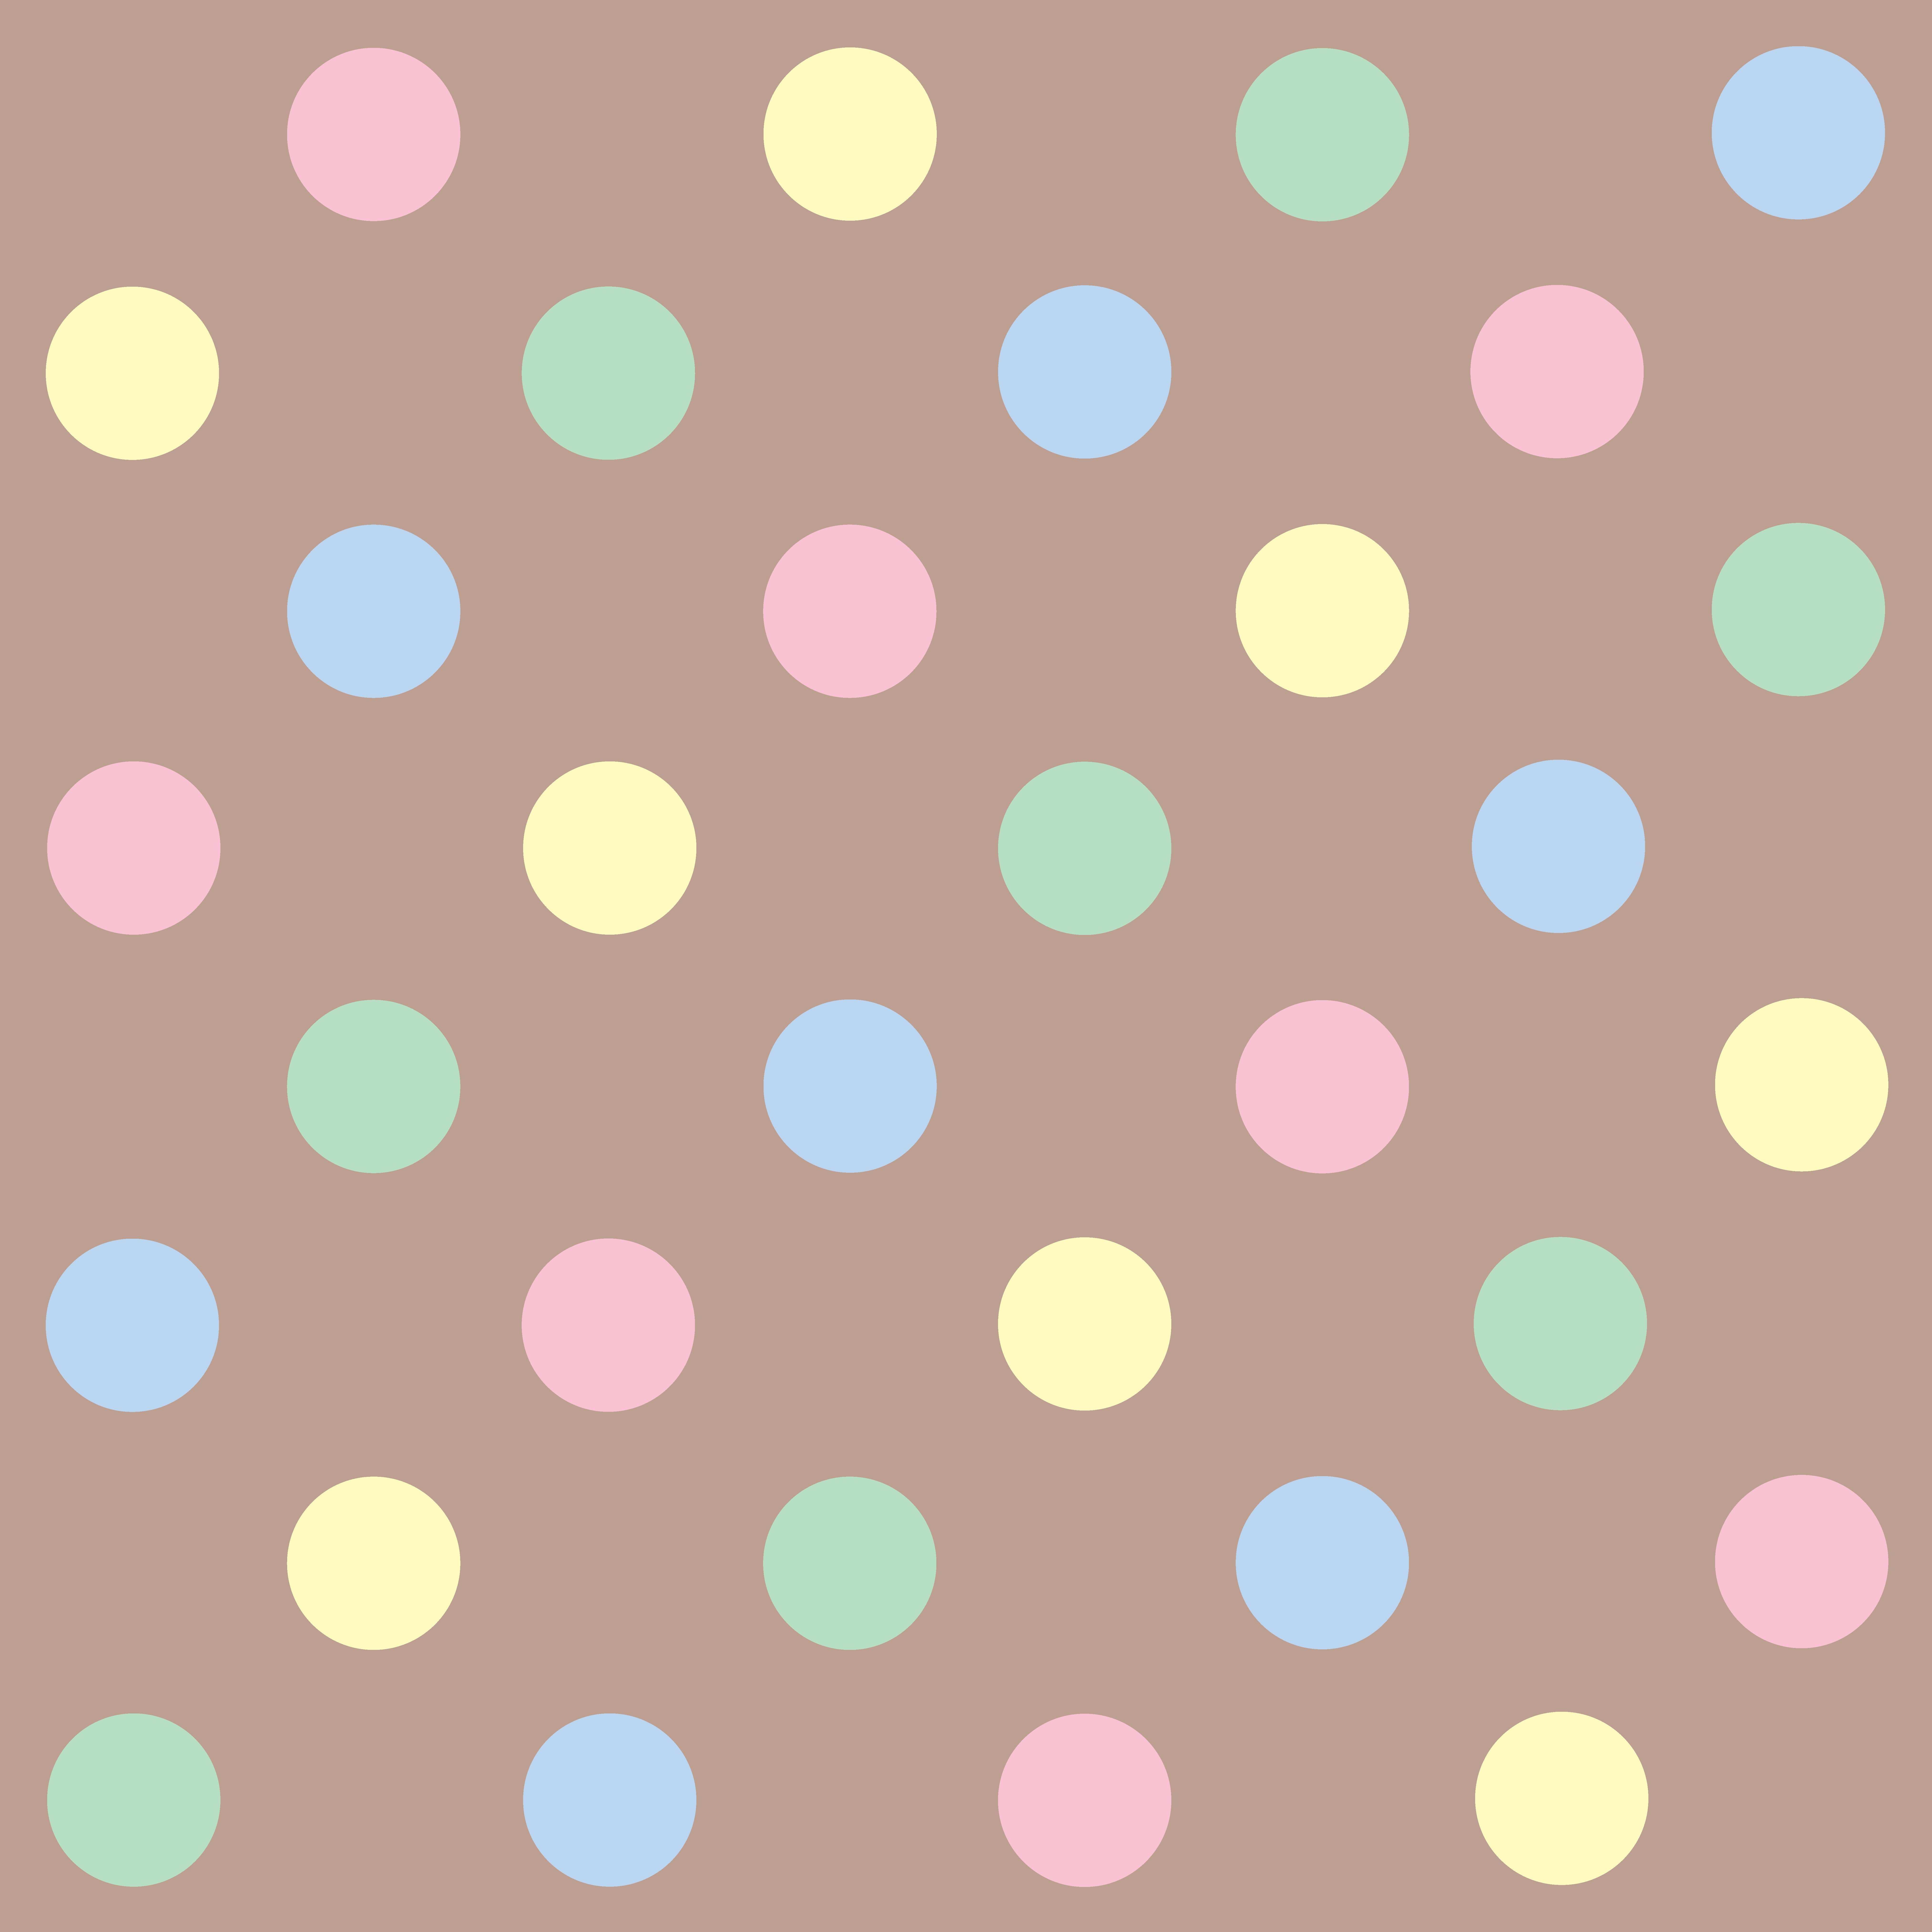 Cute Pastel Polka Dots Pattern - Free Clip Art